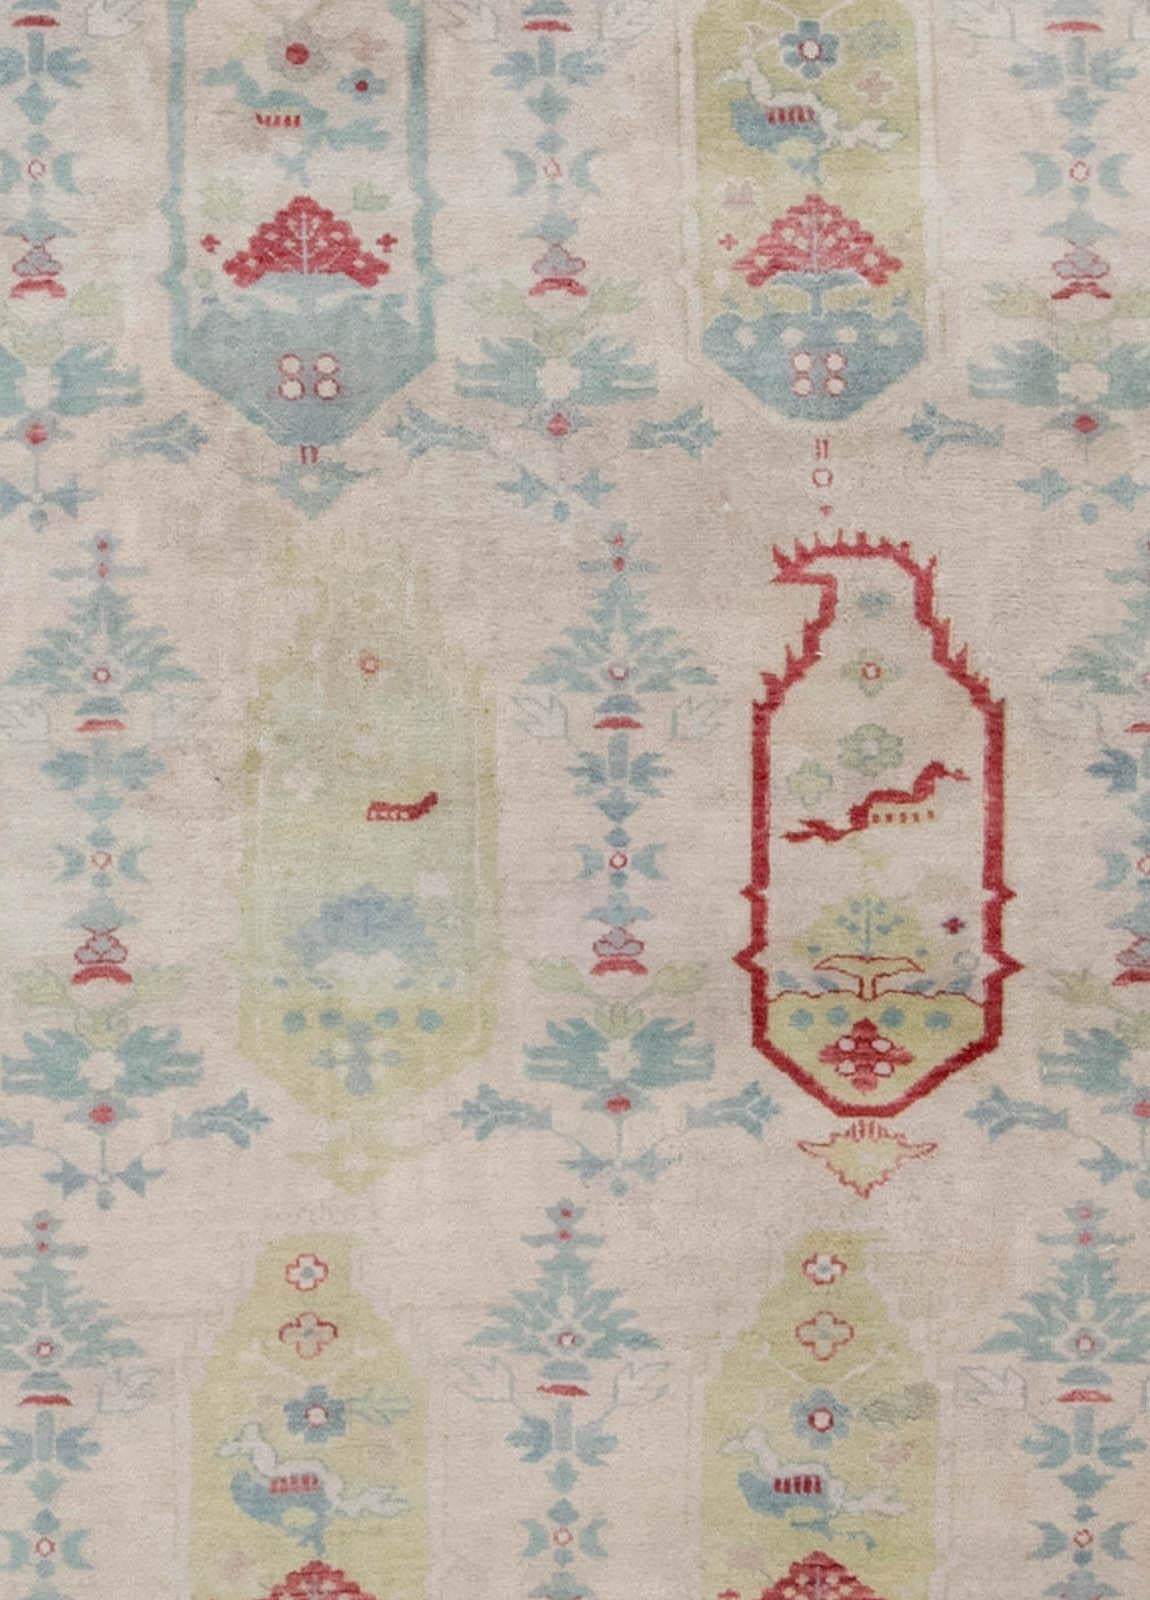 Traditional oushak design rug by Doris Leslie Blau.
Size: 11'10